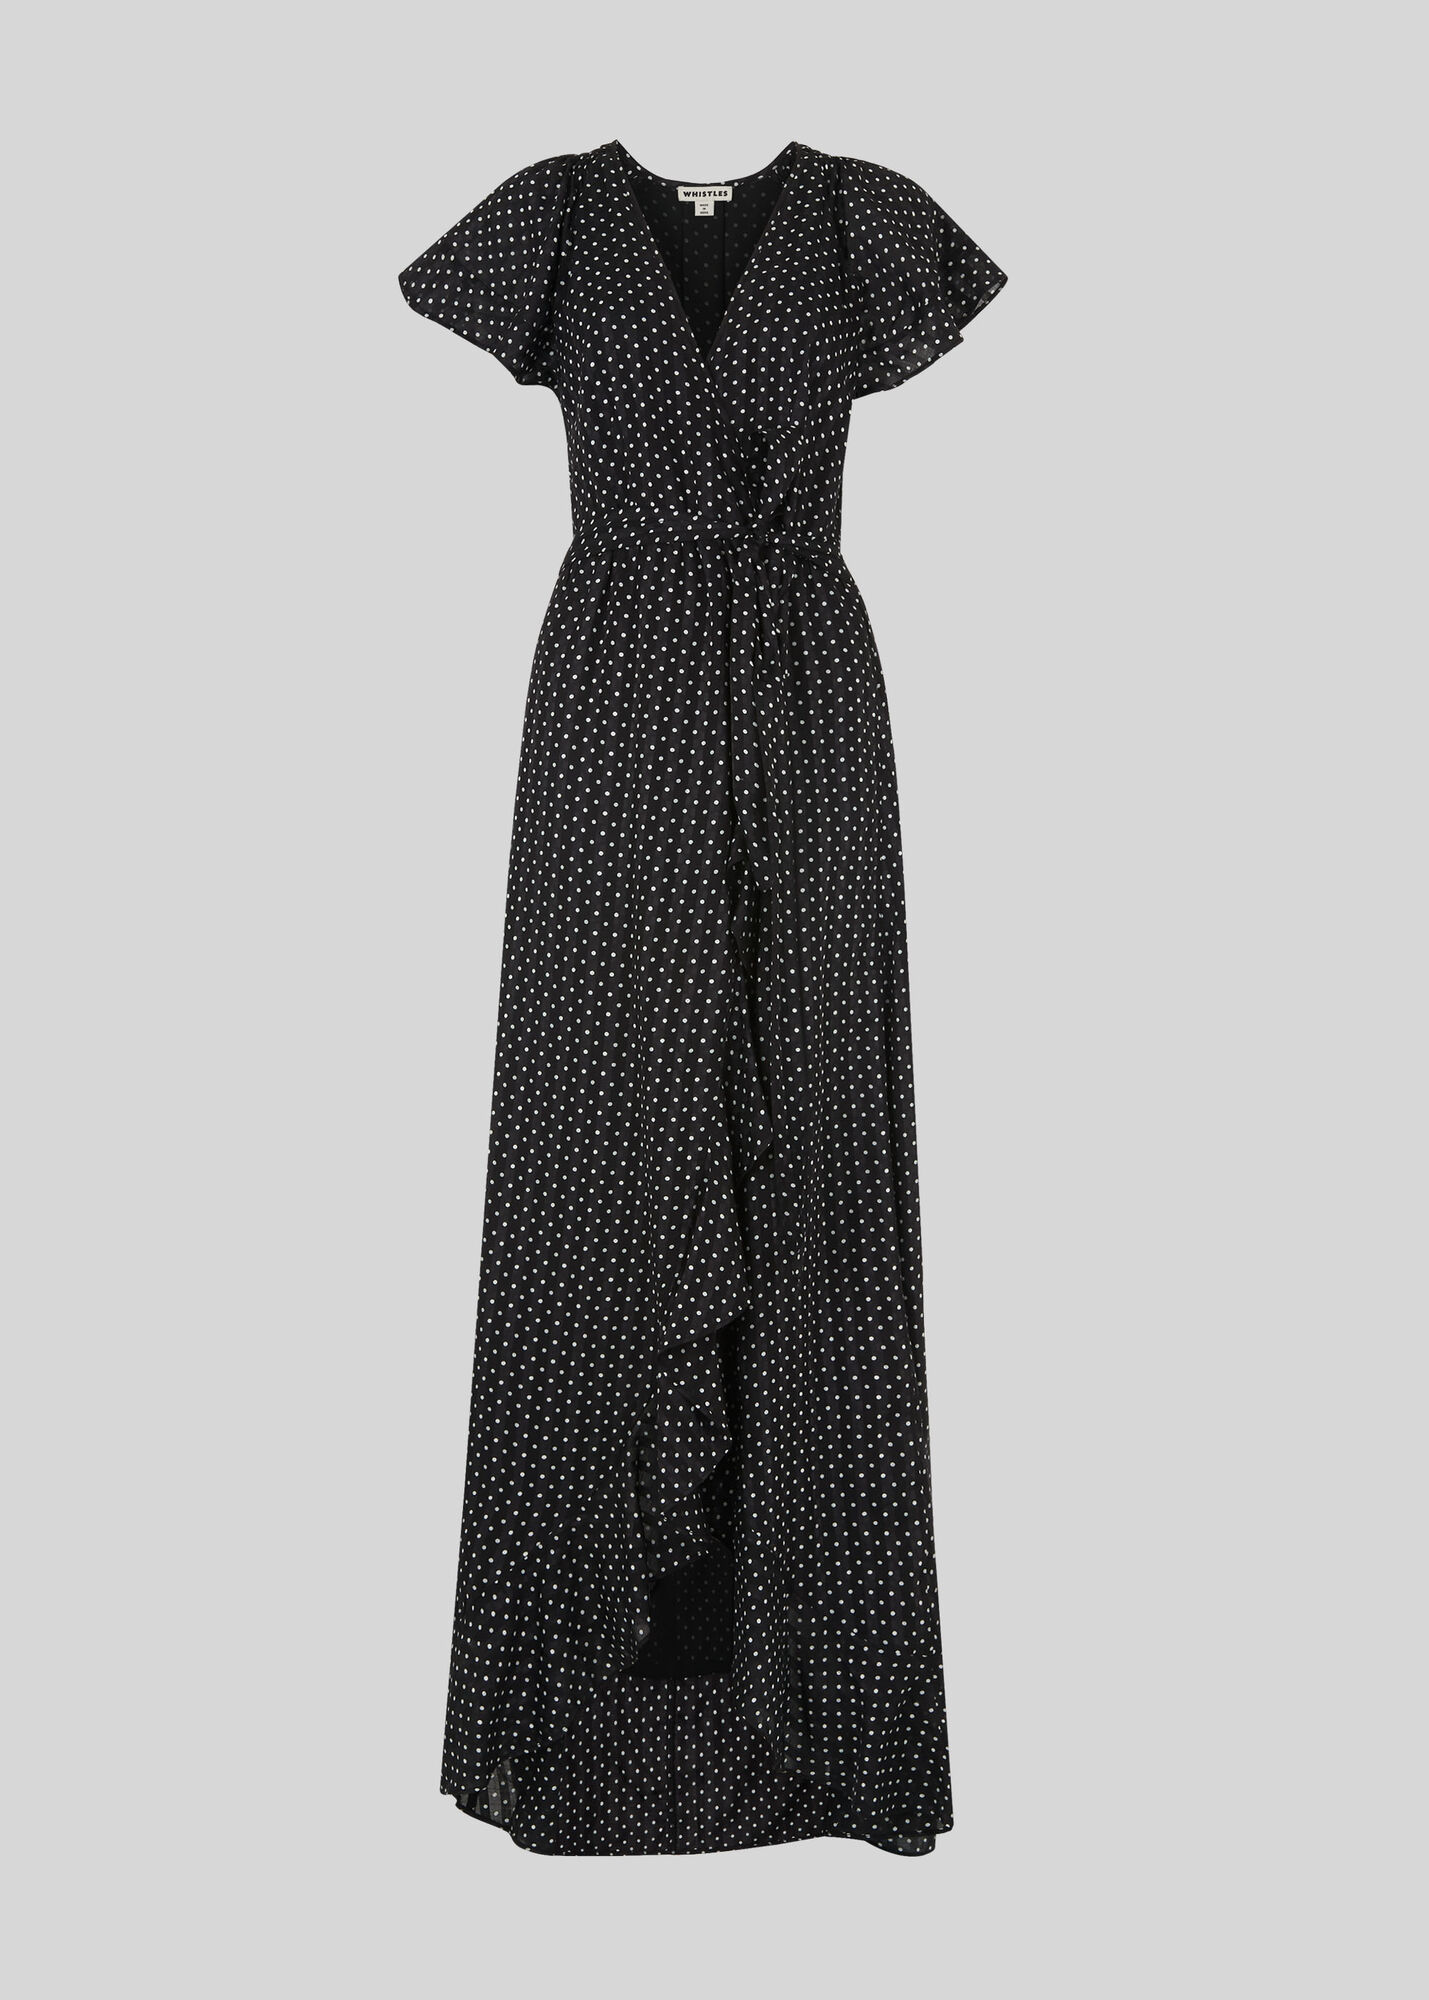 Black And White Spot Maxi Dress | WHISTLES | Whistles UK